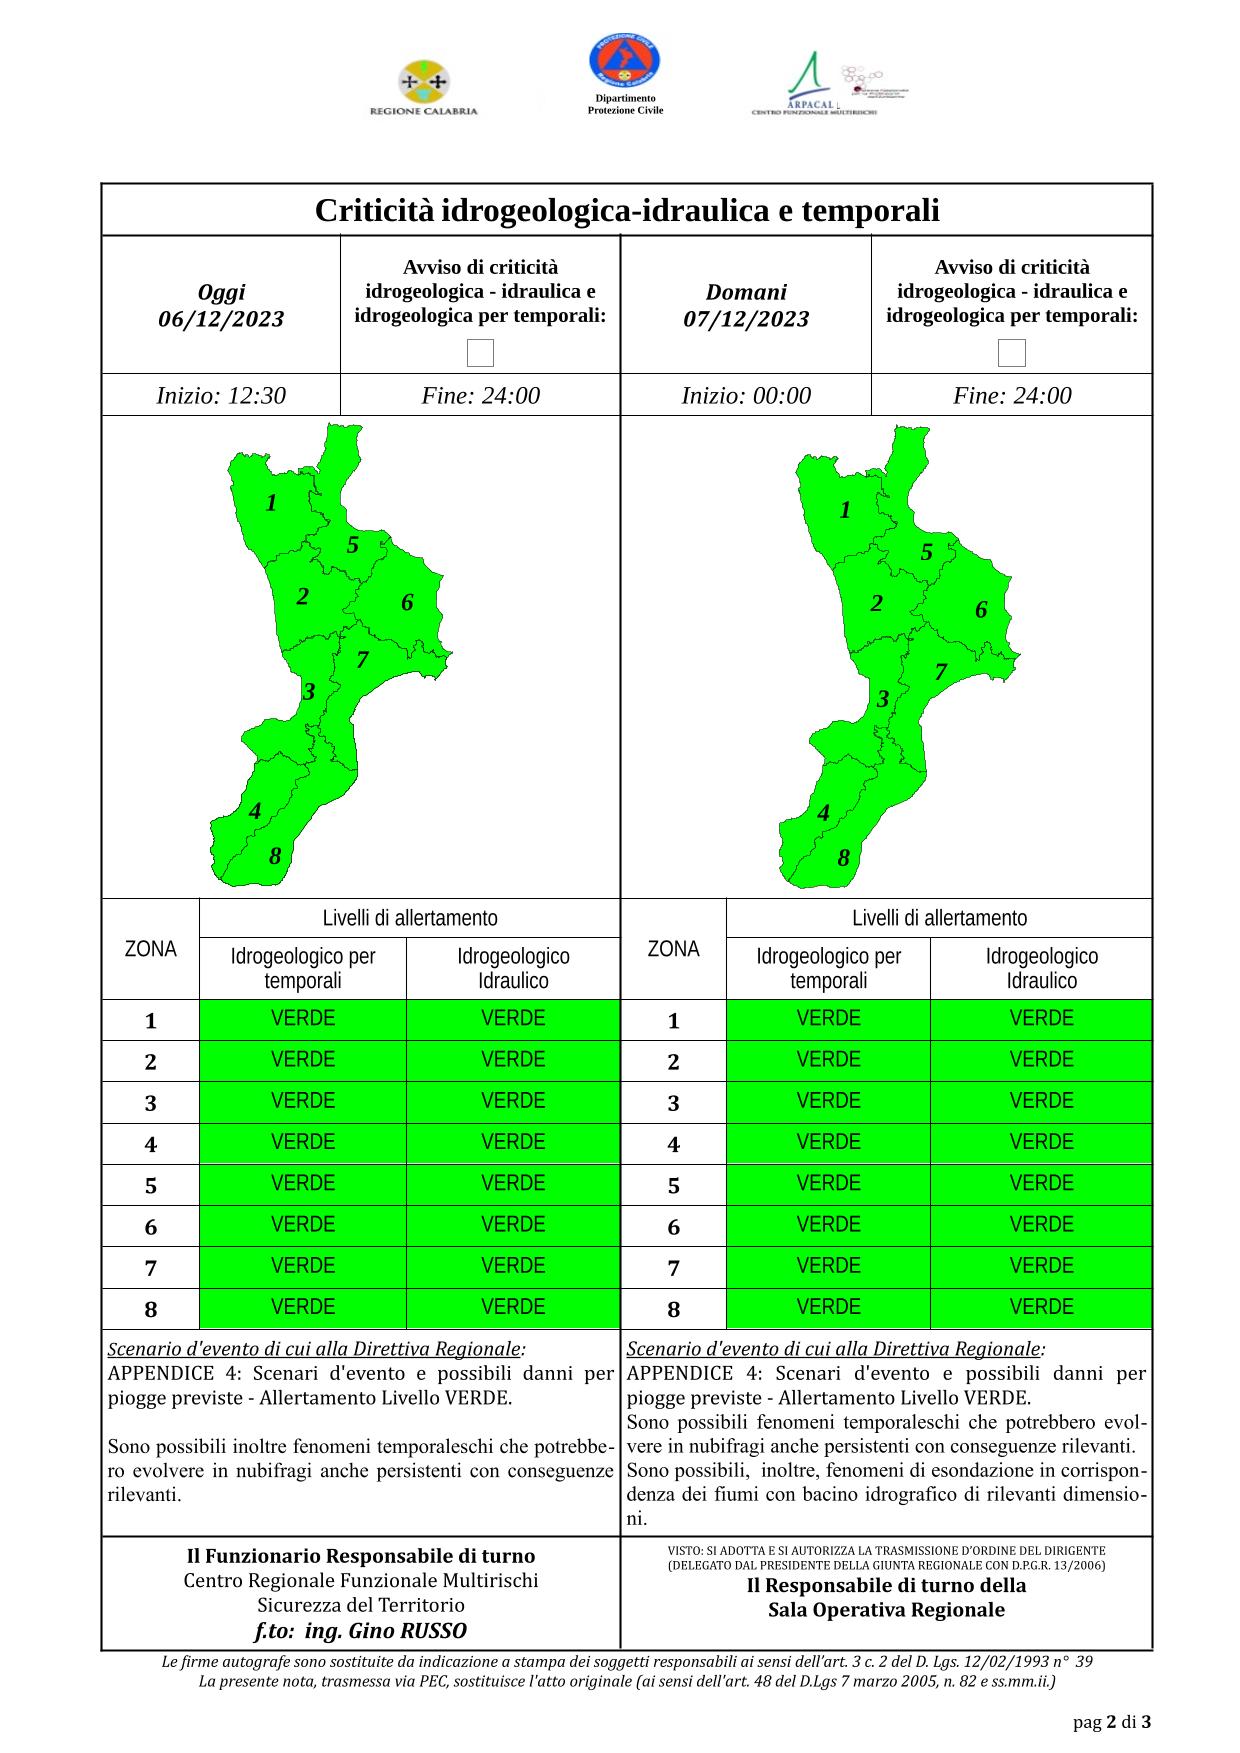 Criticità idrogeologica-idraulica e temporali in Calabria 07-12-2023